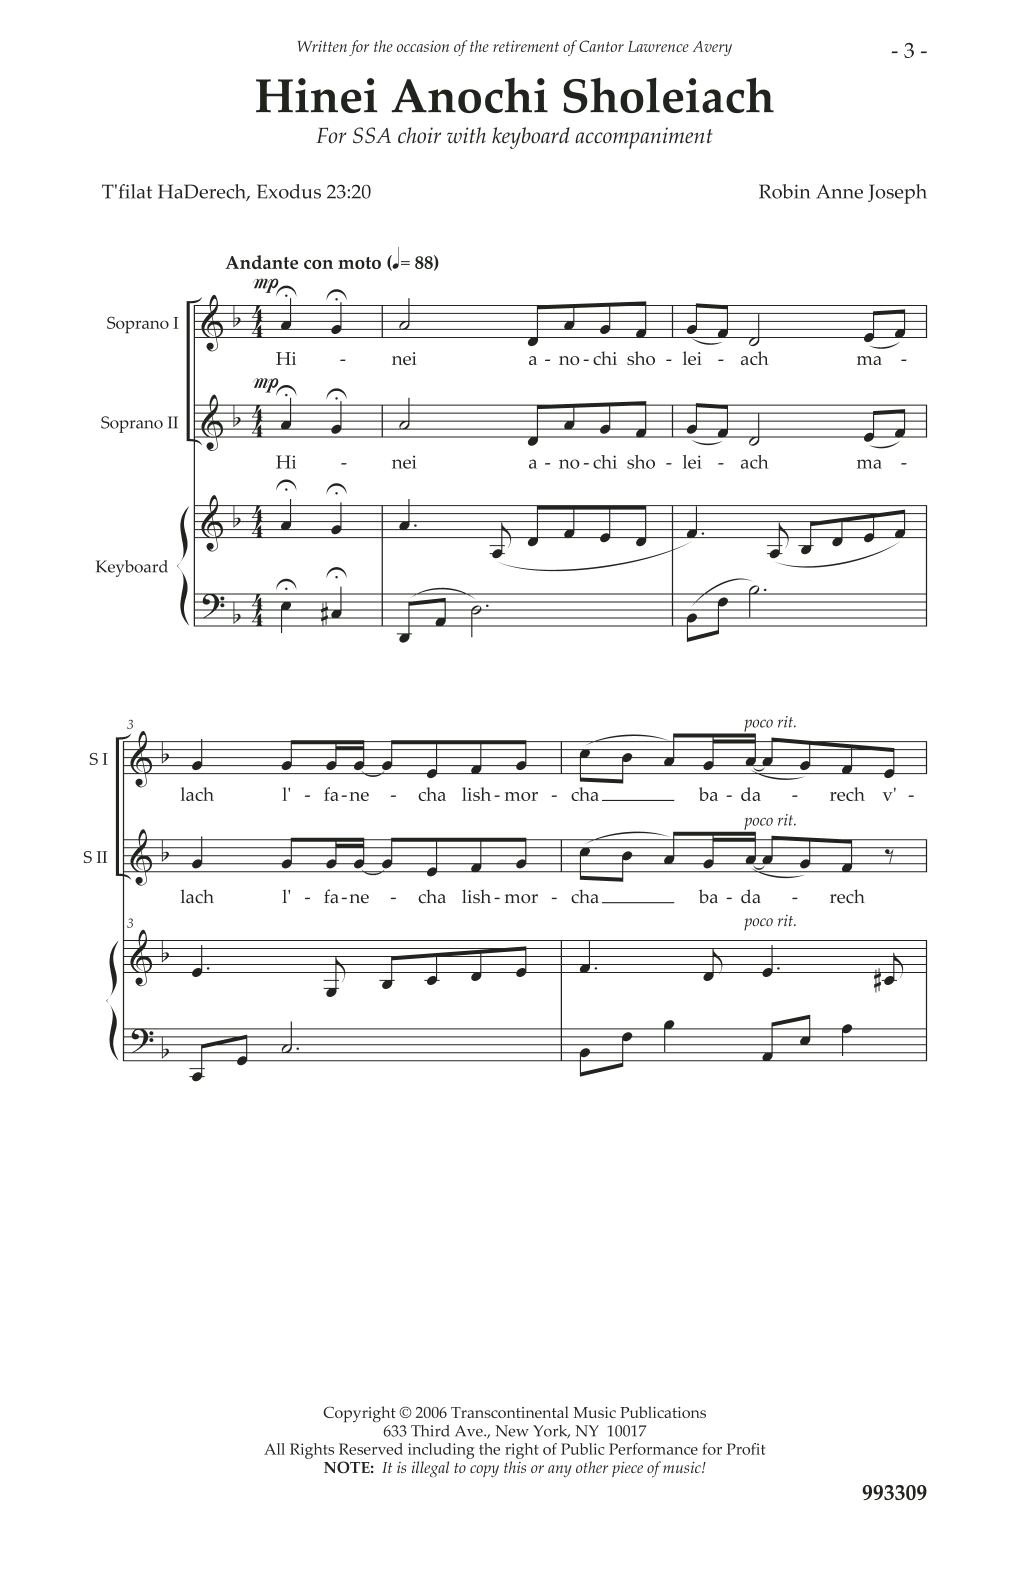 Download Anne Joseph Hinei Anochi Sholeiach Sheet Music and learn how to play SSA Choir PDF digital score in minutes